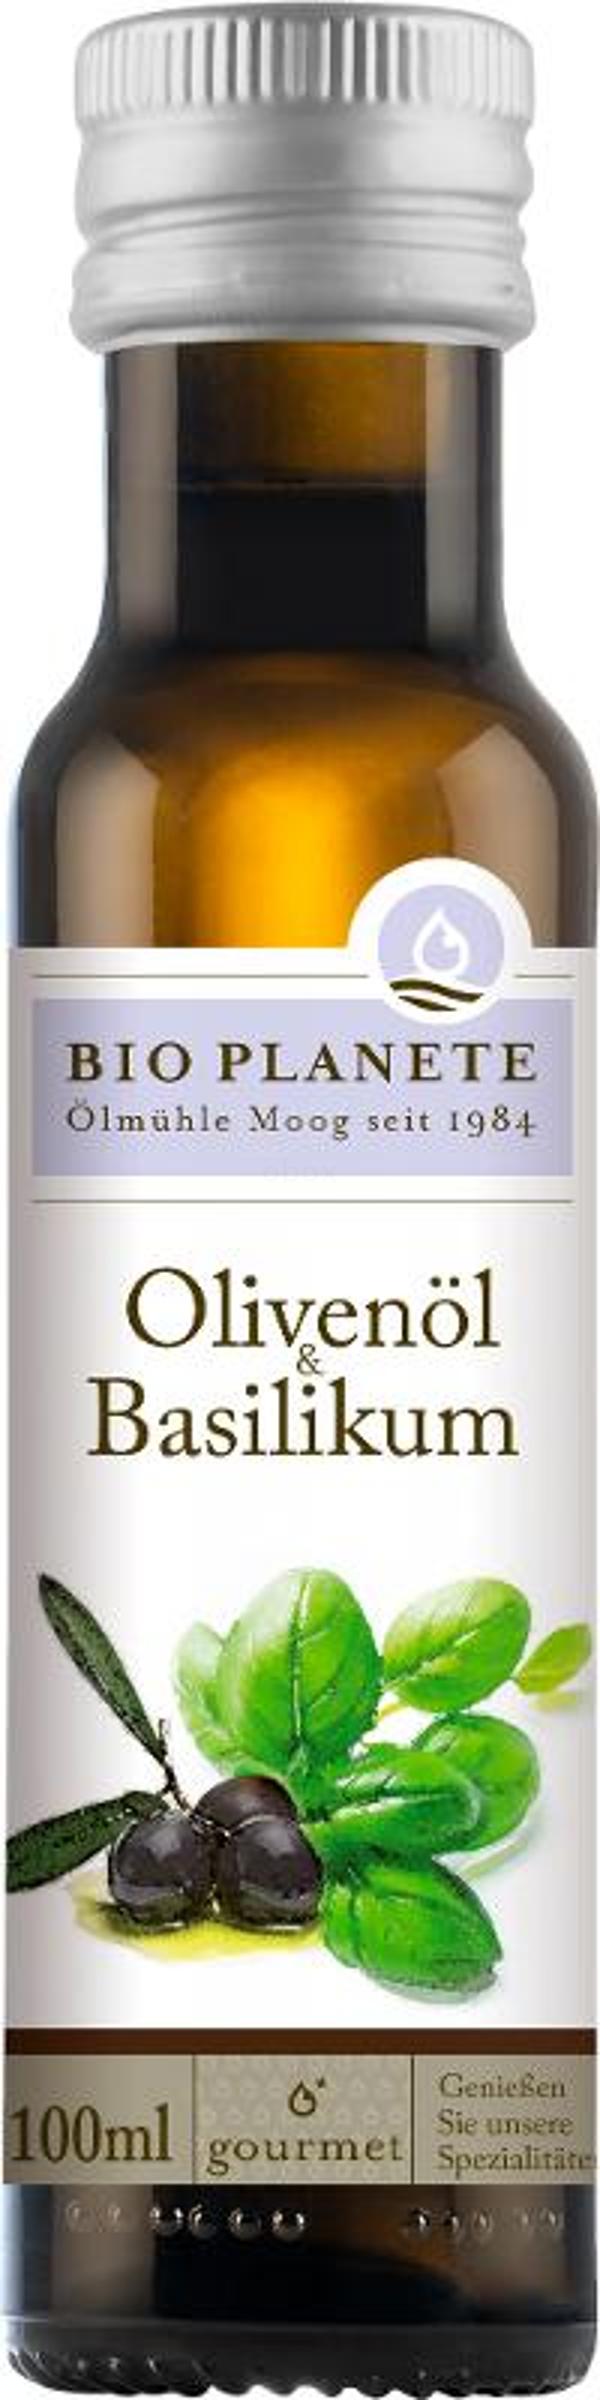 Produktfoto zu Bio Planete Olivenöl mit Basilikum - 100ml